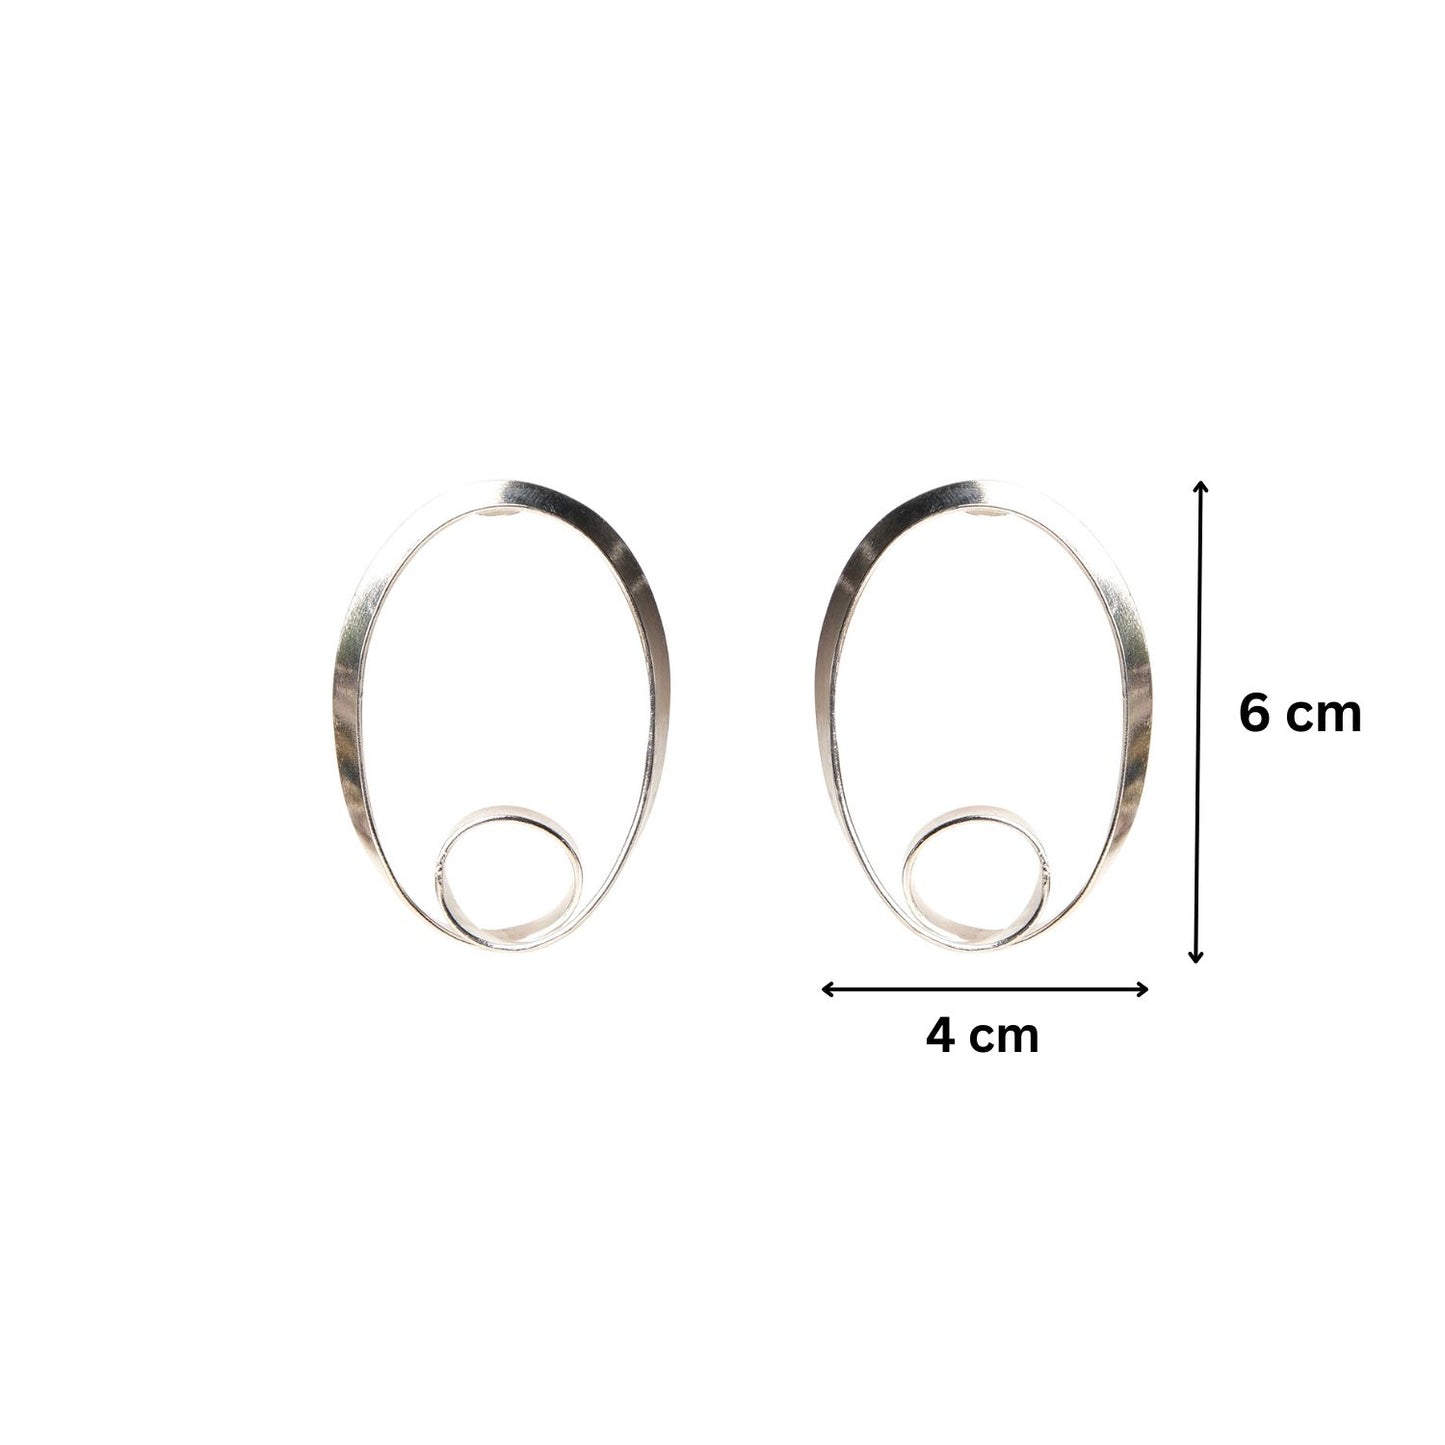 Grand Oval Twisted Silver Hoop Earrings